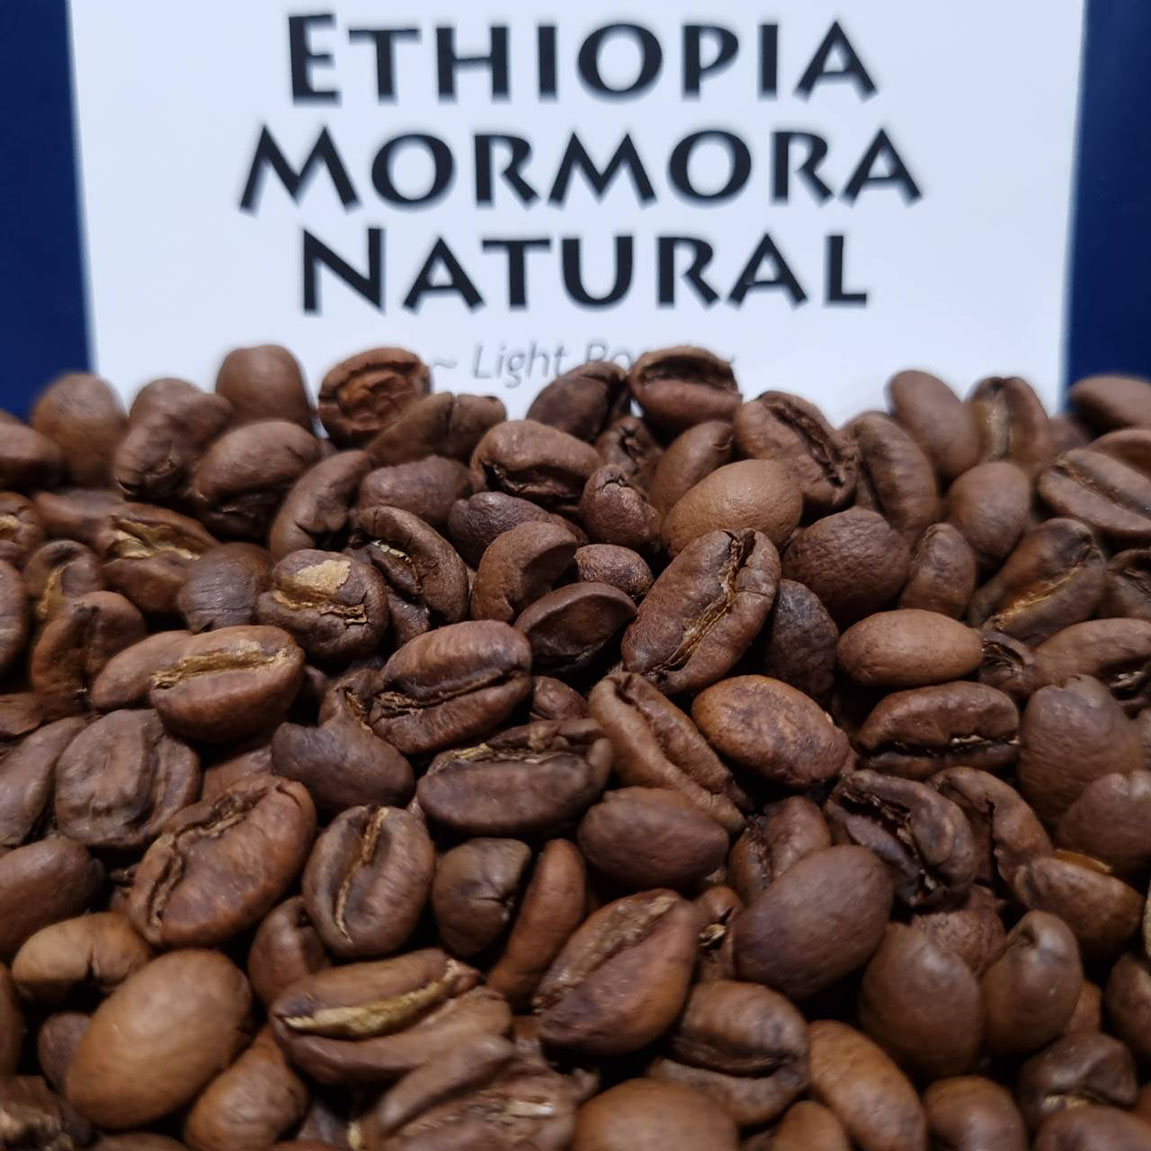 Ethiopia Mormora Natural Bean